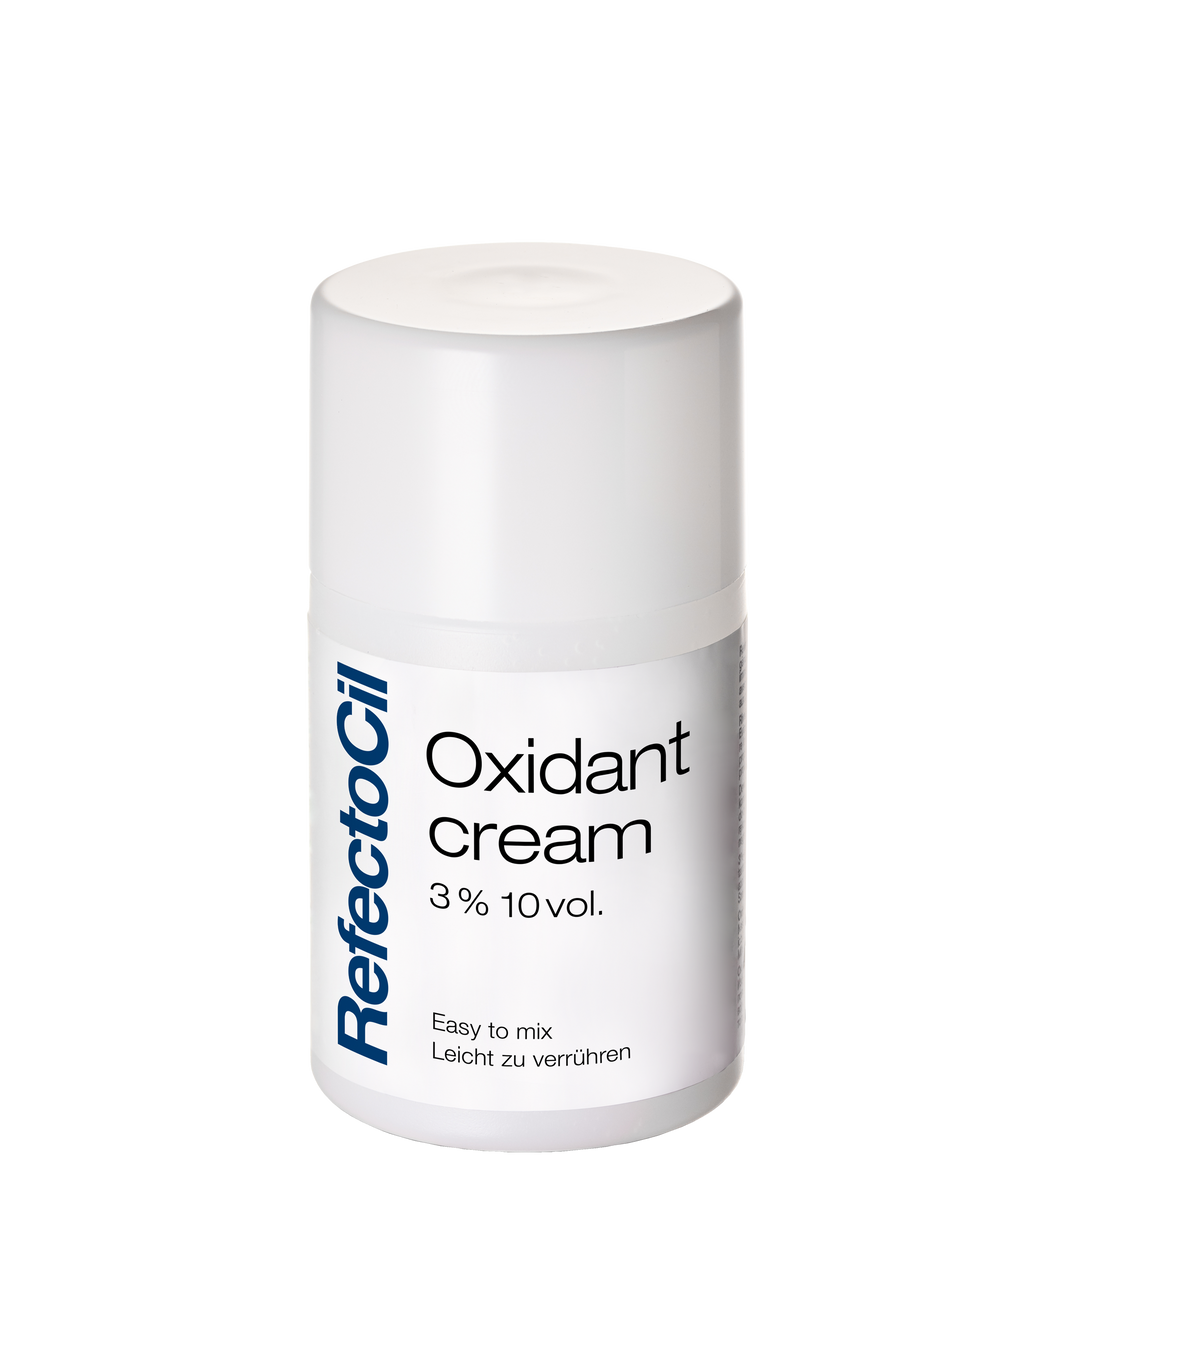 RefectoCil 3% Oxidant - Cream